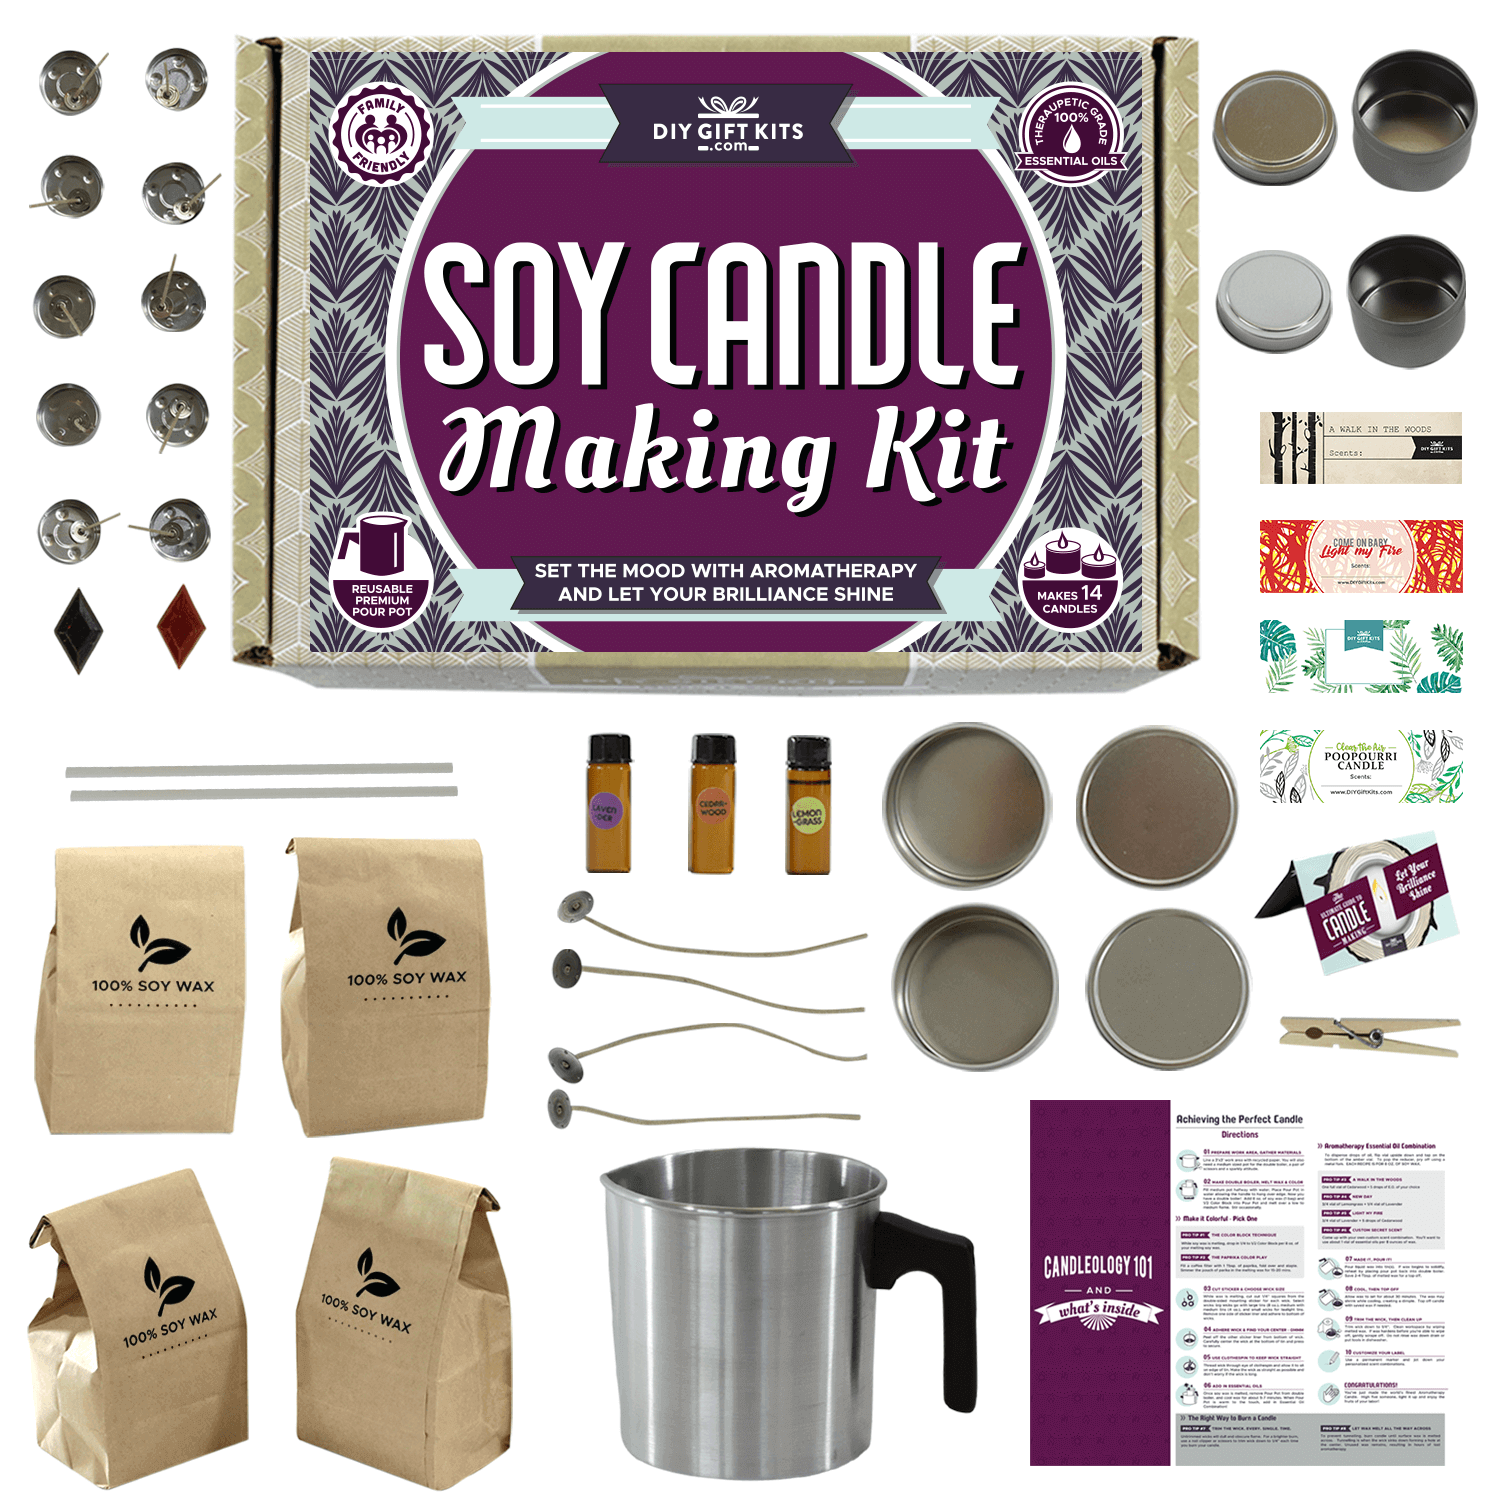 Diy Candle Making Kit Supplies, Soy Wax Diy Candle Craft Tools